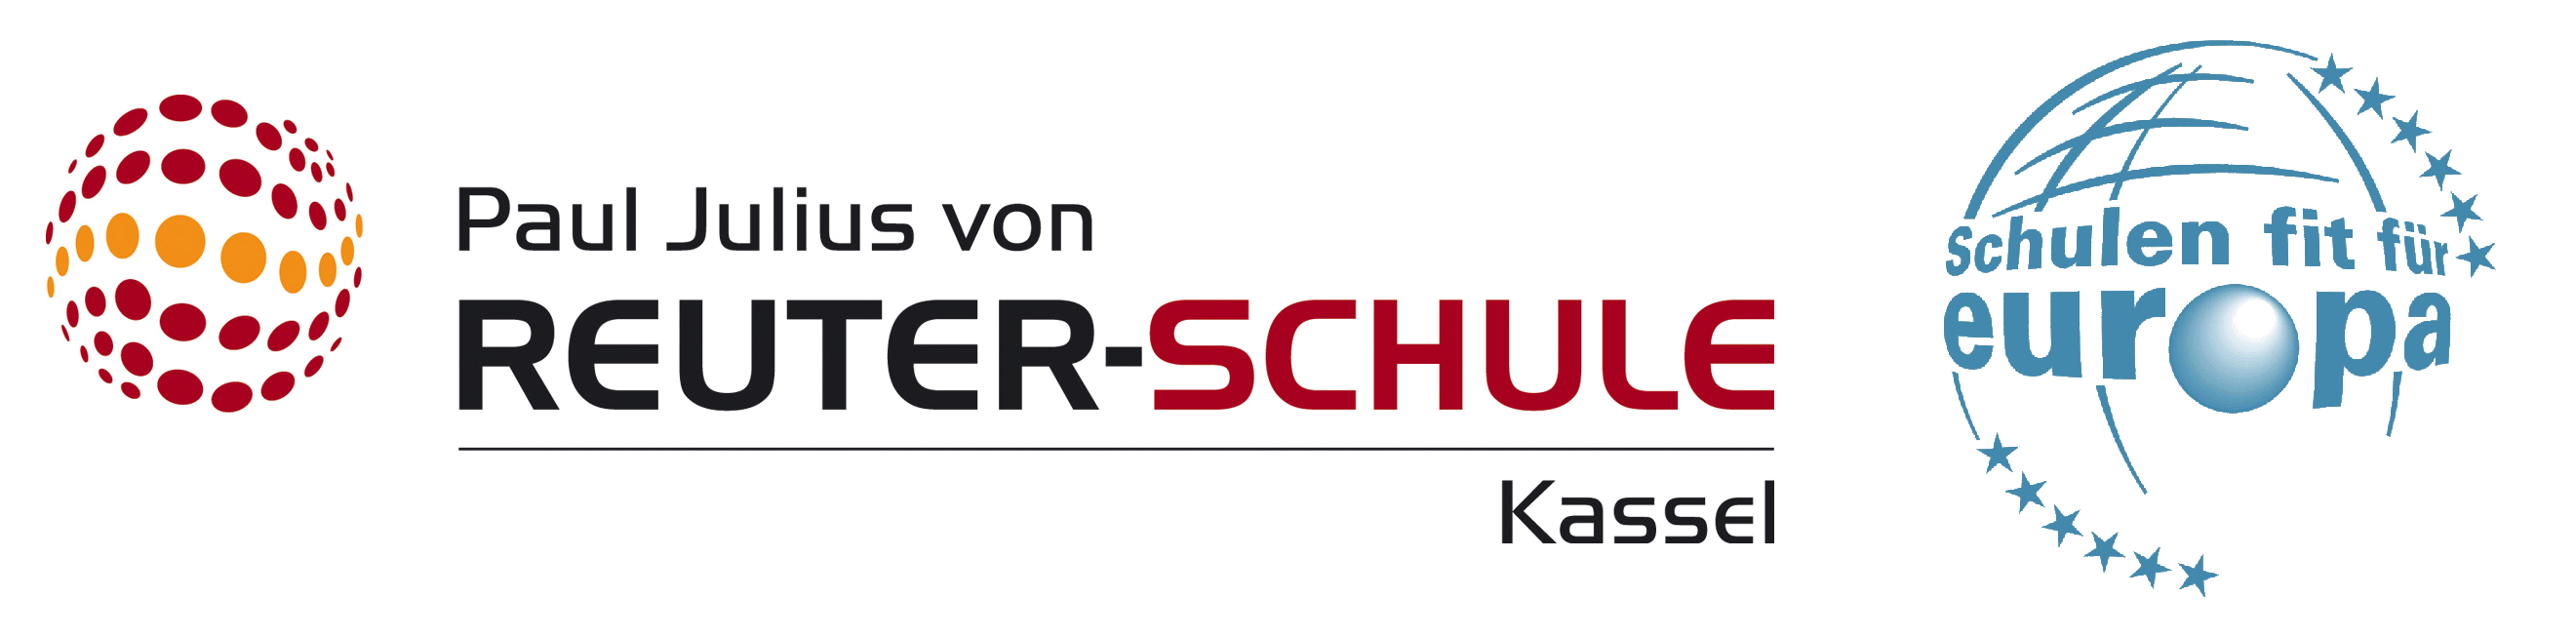 Paul-Julius-von Reuter-Schule logo